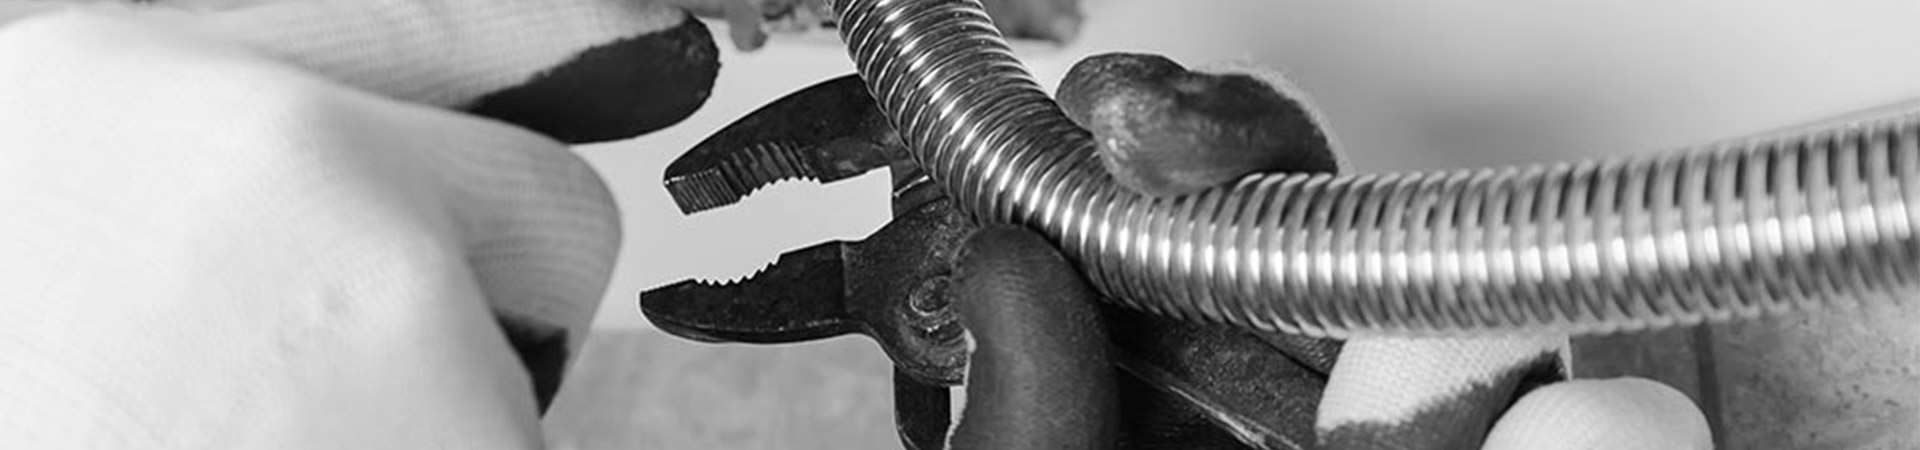 hero-water-heater-tools-plumbing-pipes-hutchinson-ks2